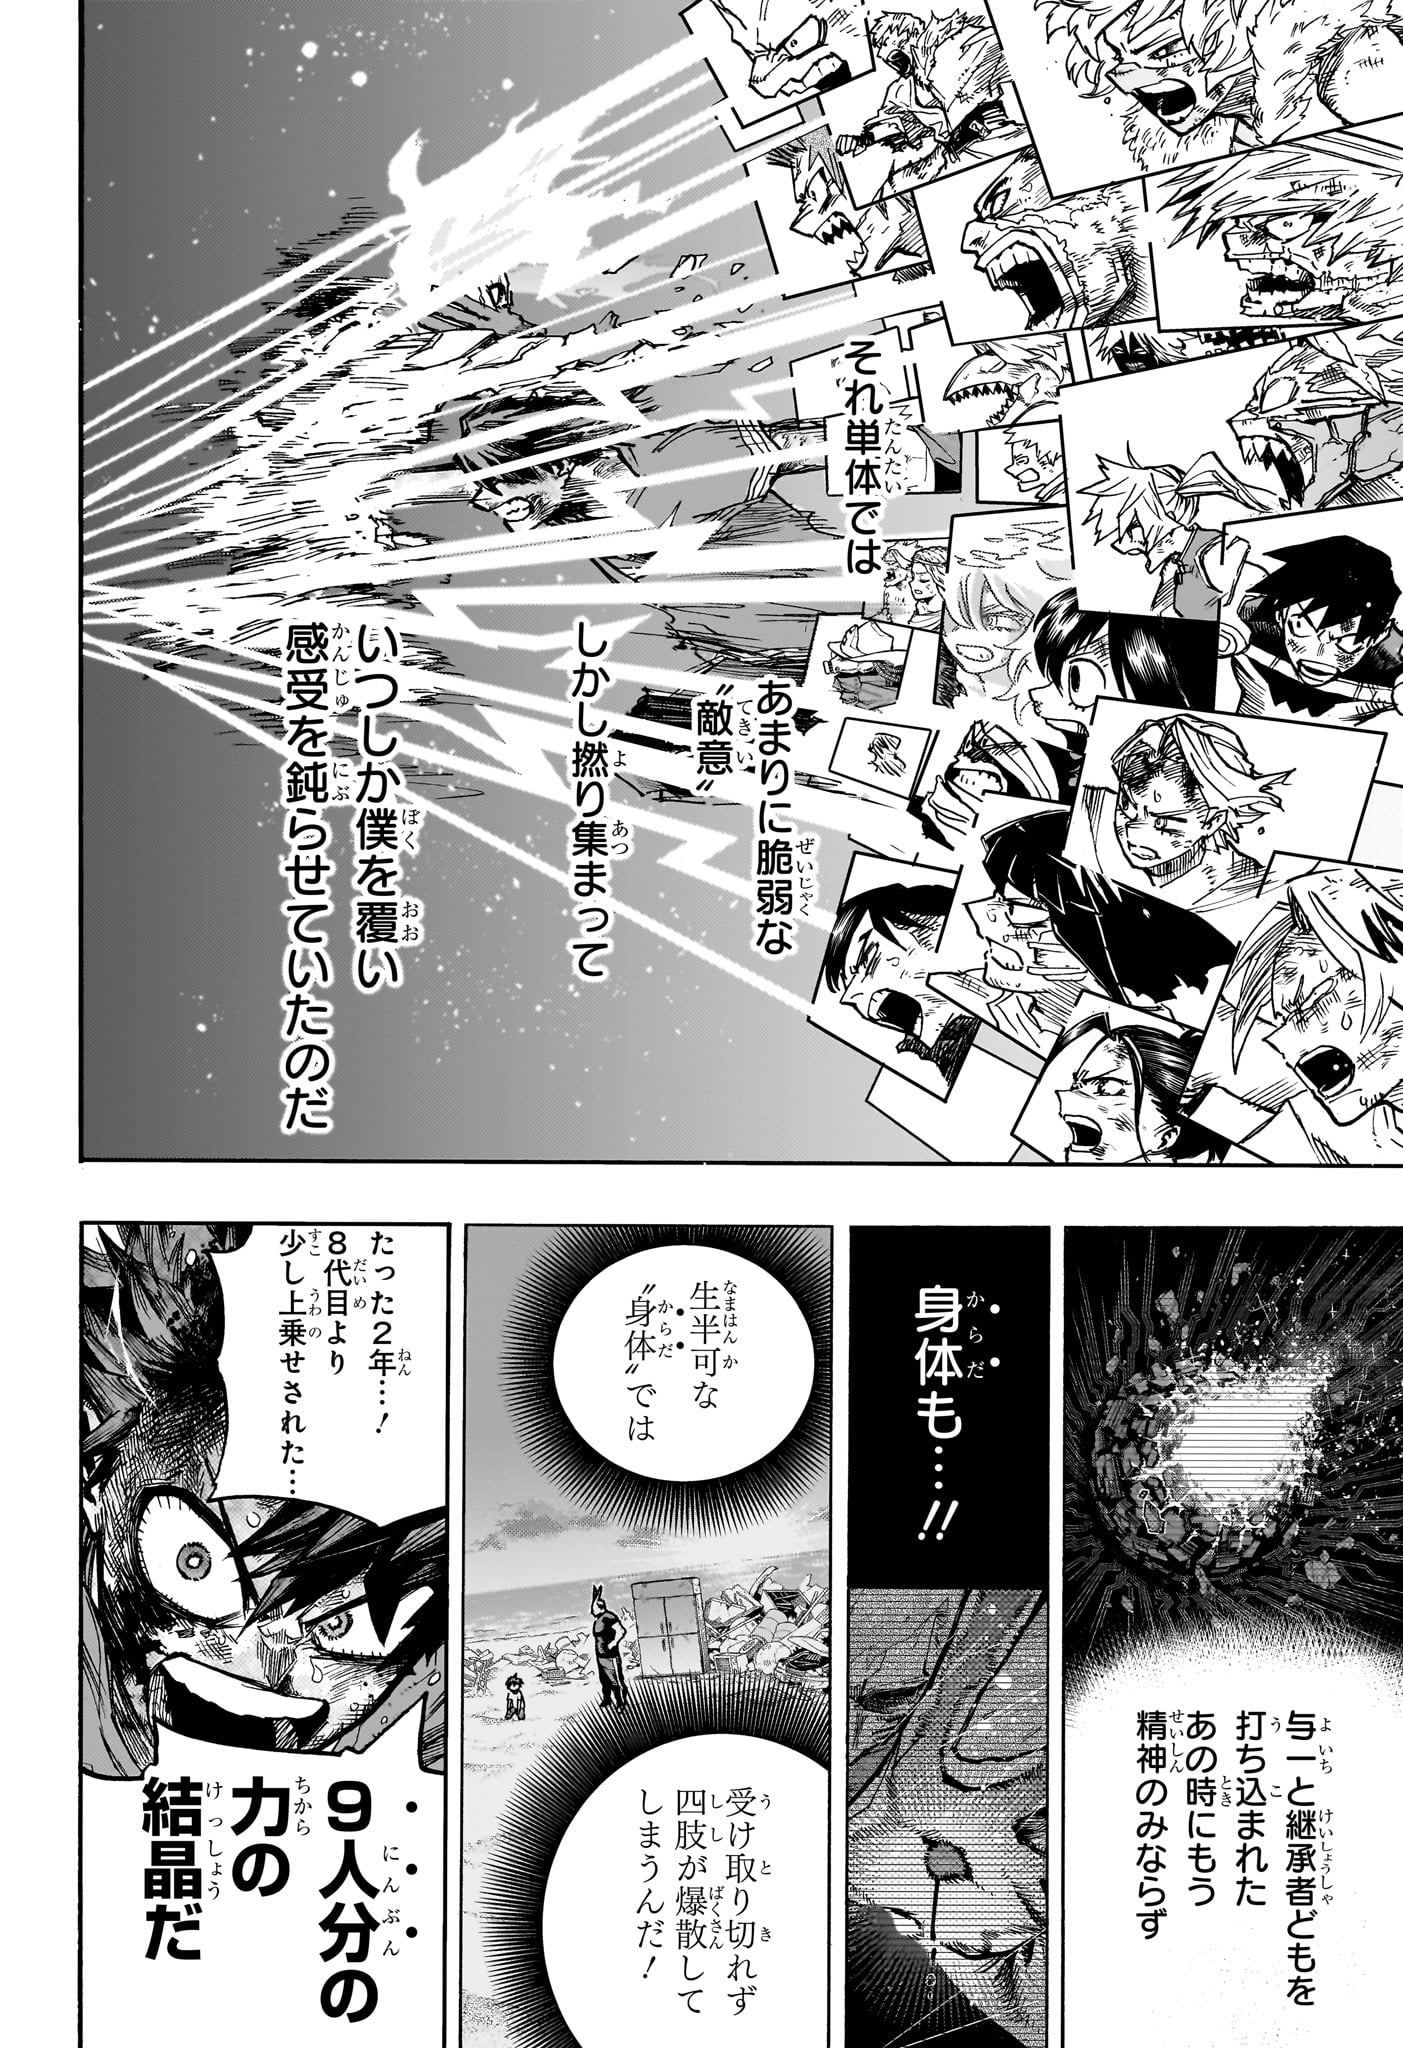 Boku no Hero Academia - Chapter 423 - Page 2